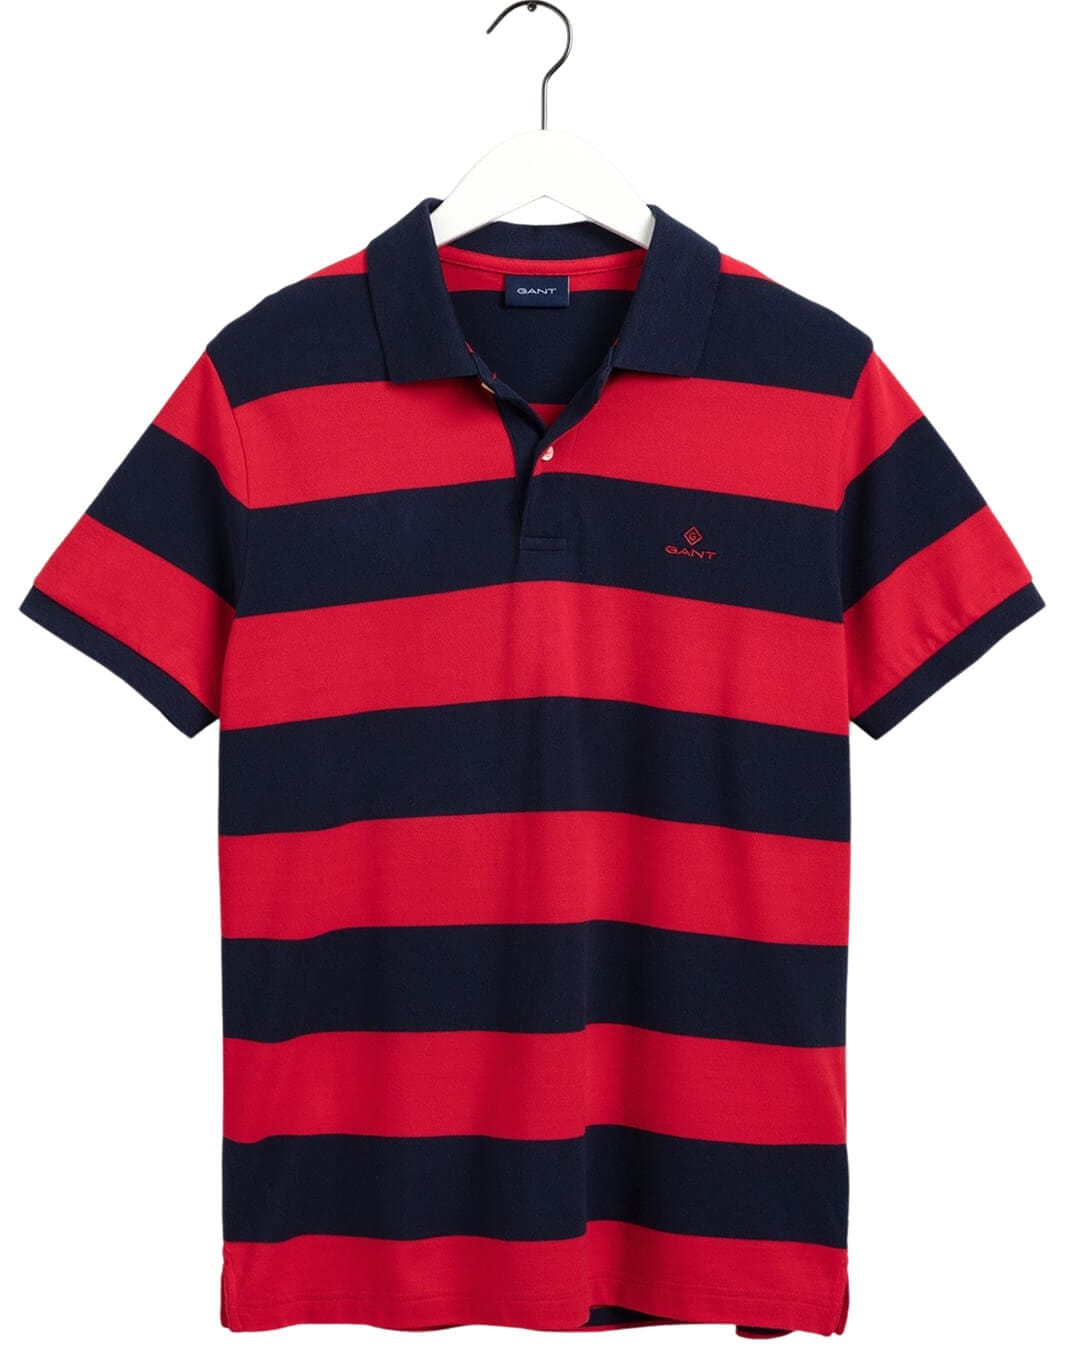 Gant Polo Shirts Gant Barstripe Pique Red Polo Shirt